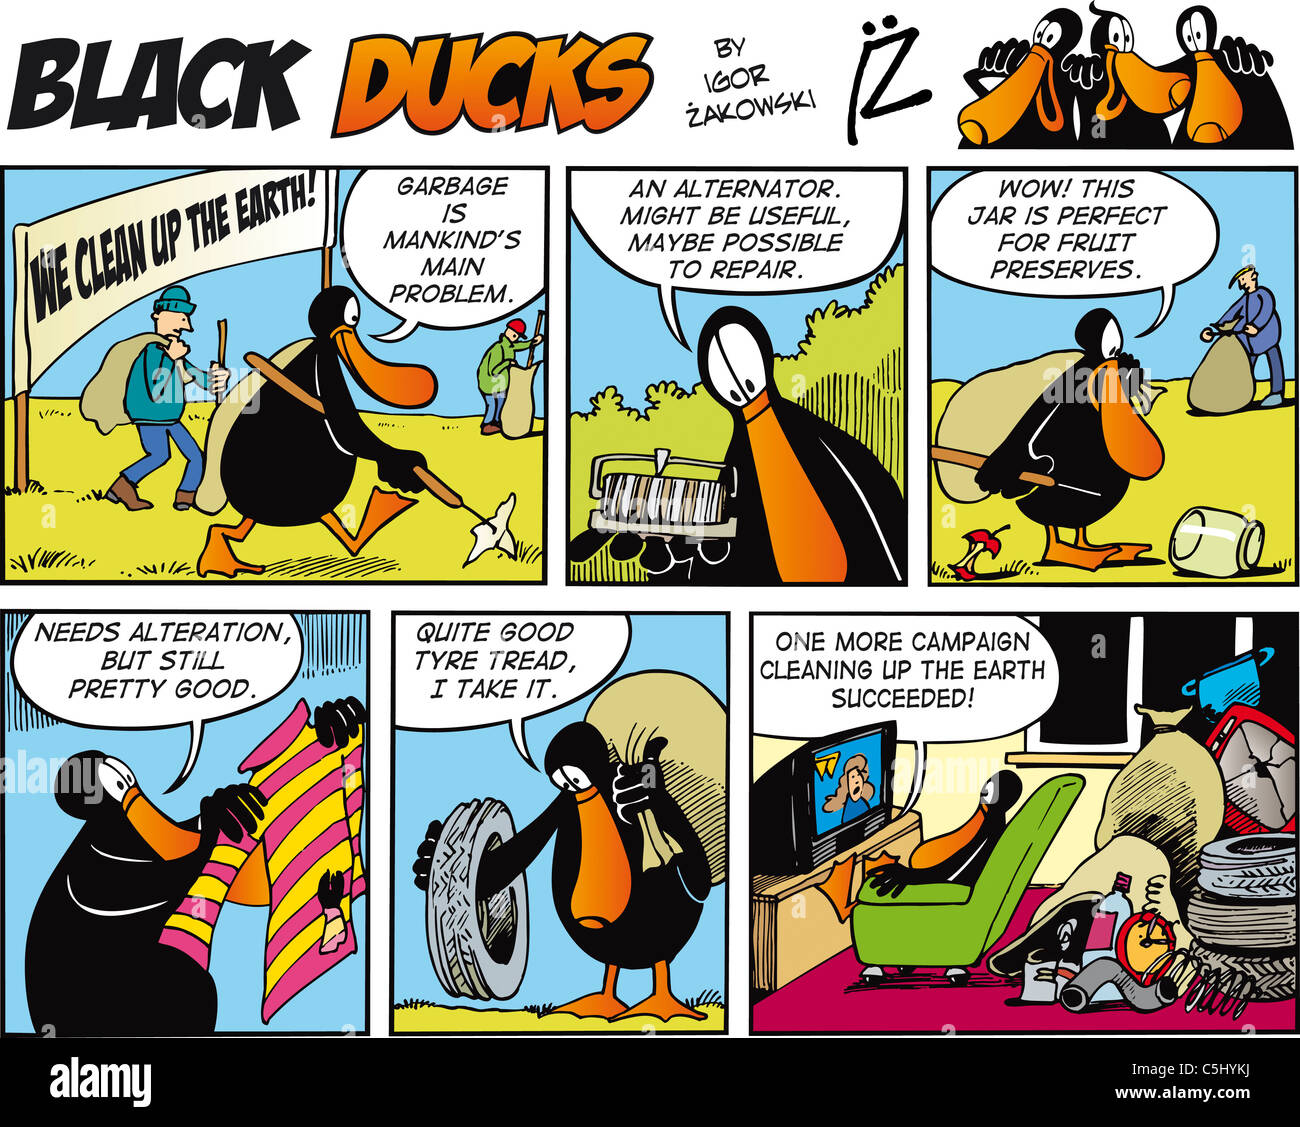 Black Ducks Comic Story Episode 72 Stock Photo Alamy